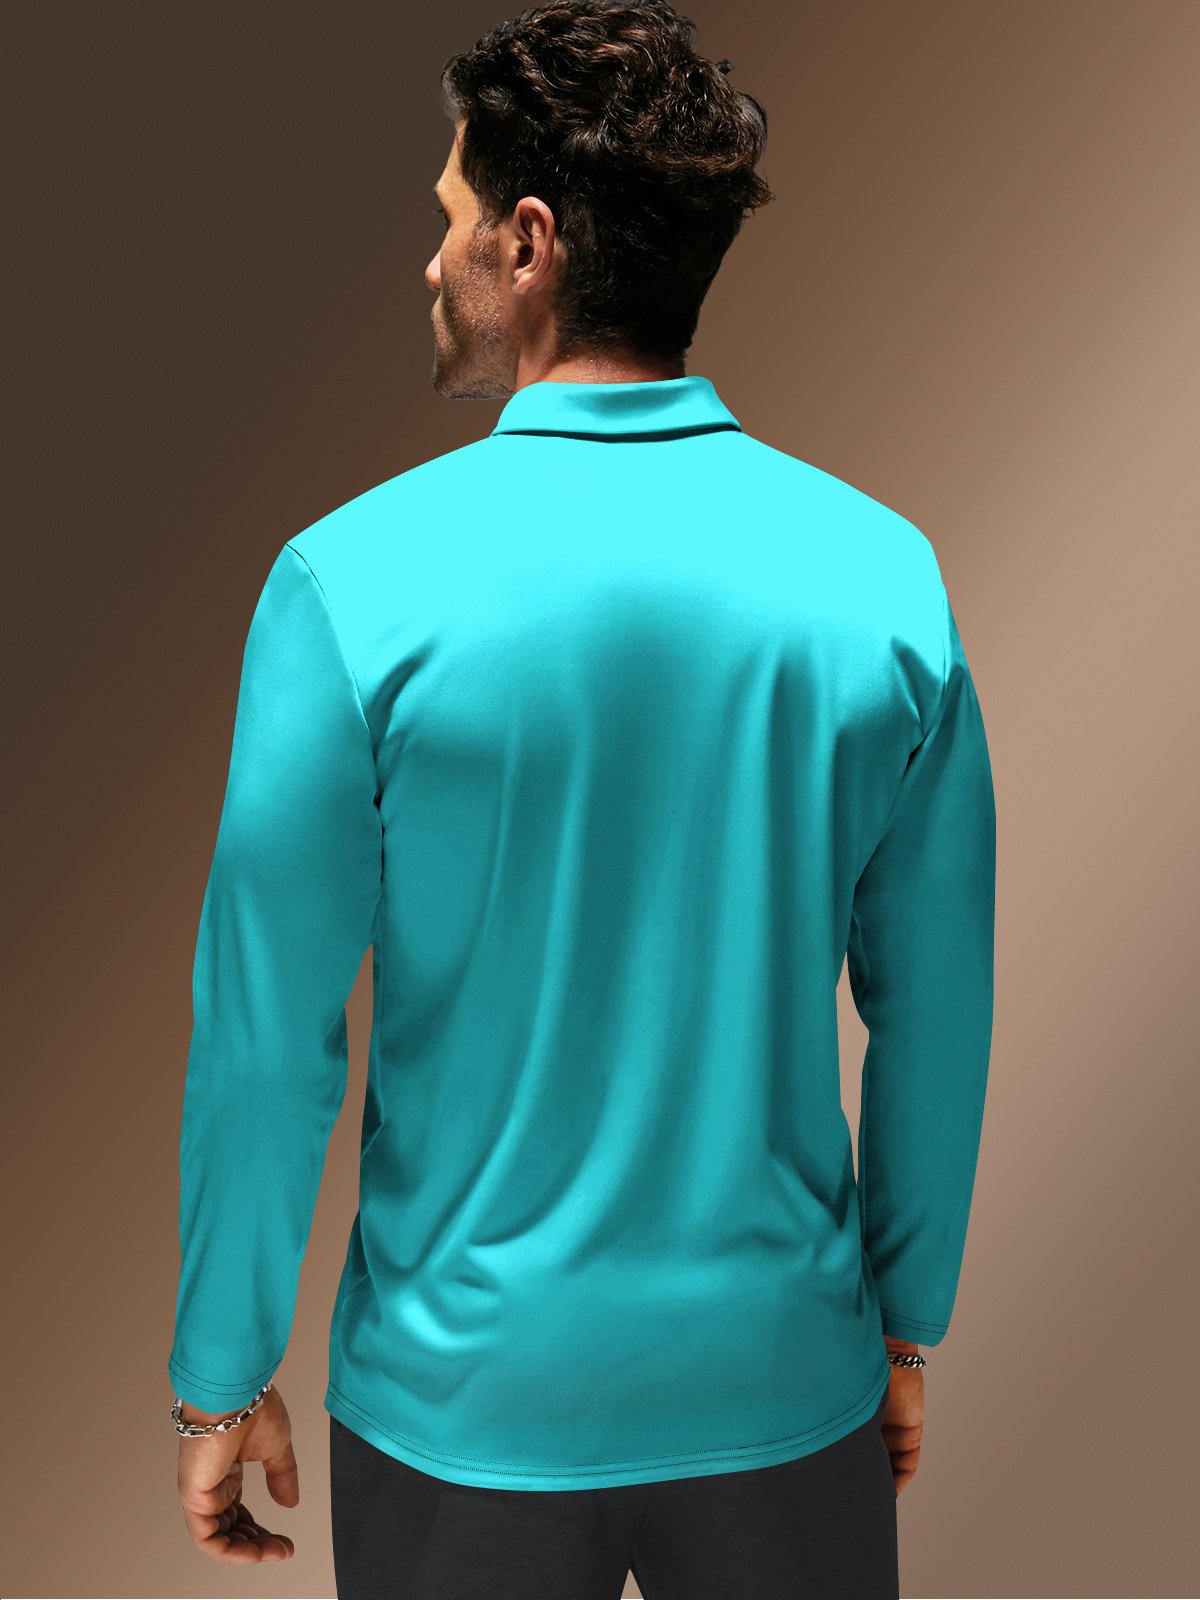 Plain Light Business Zip Long Sleeve Casual Polo Shirt